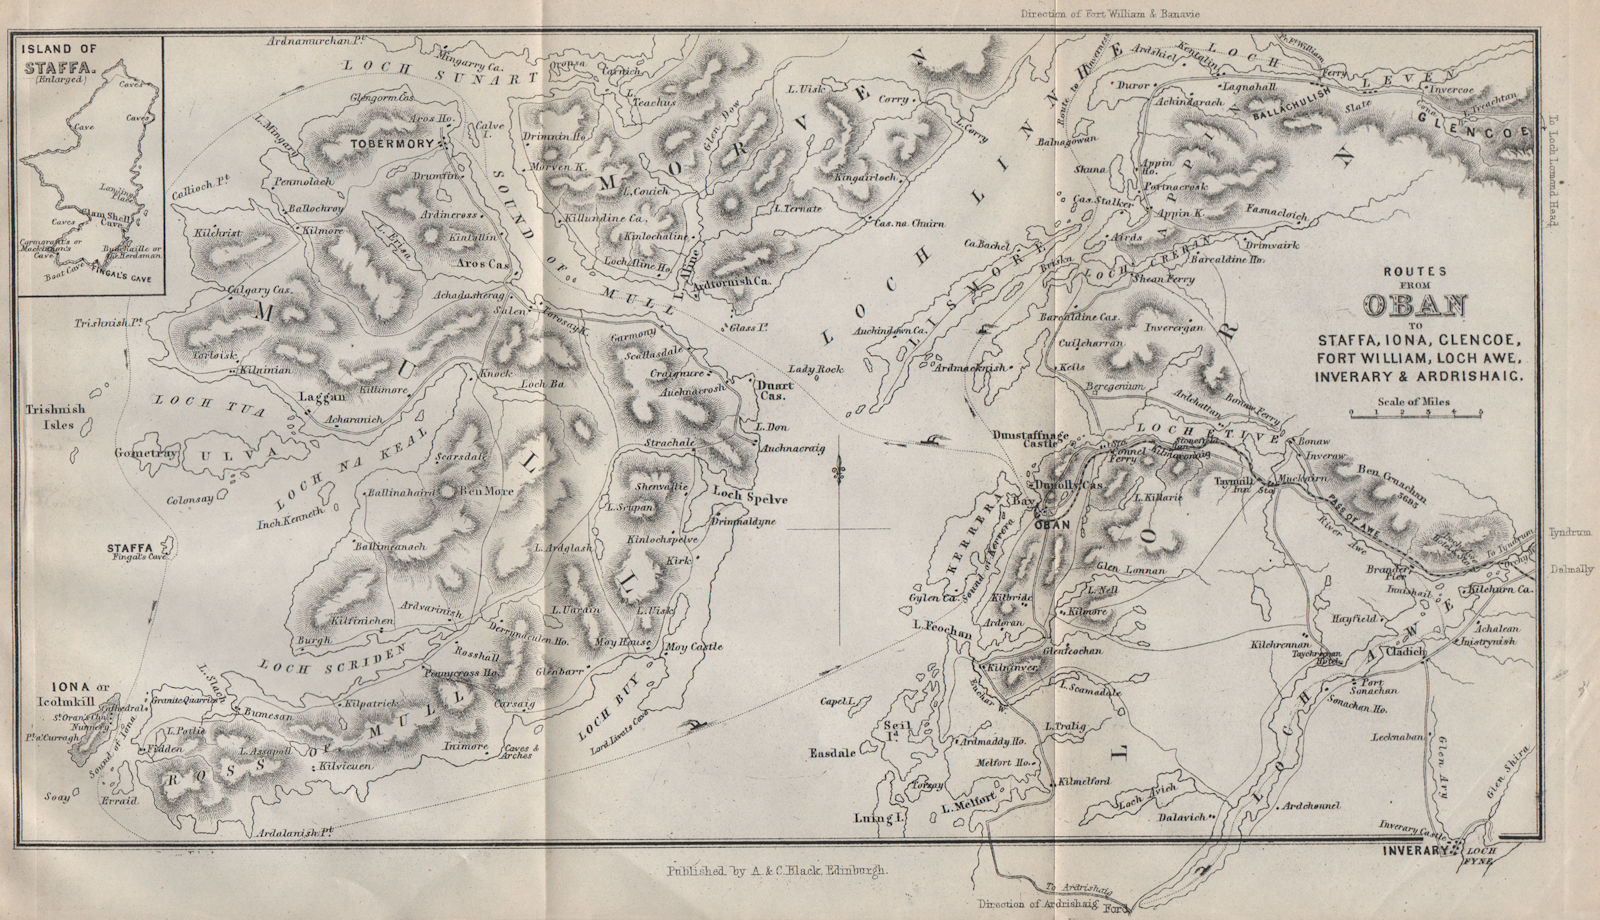 OBAN environs. Ioana Staffa Glencoe Fort William Loch Awe. Scotland 1886 map